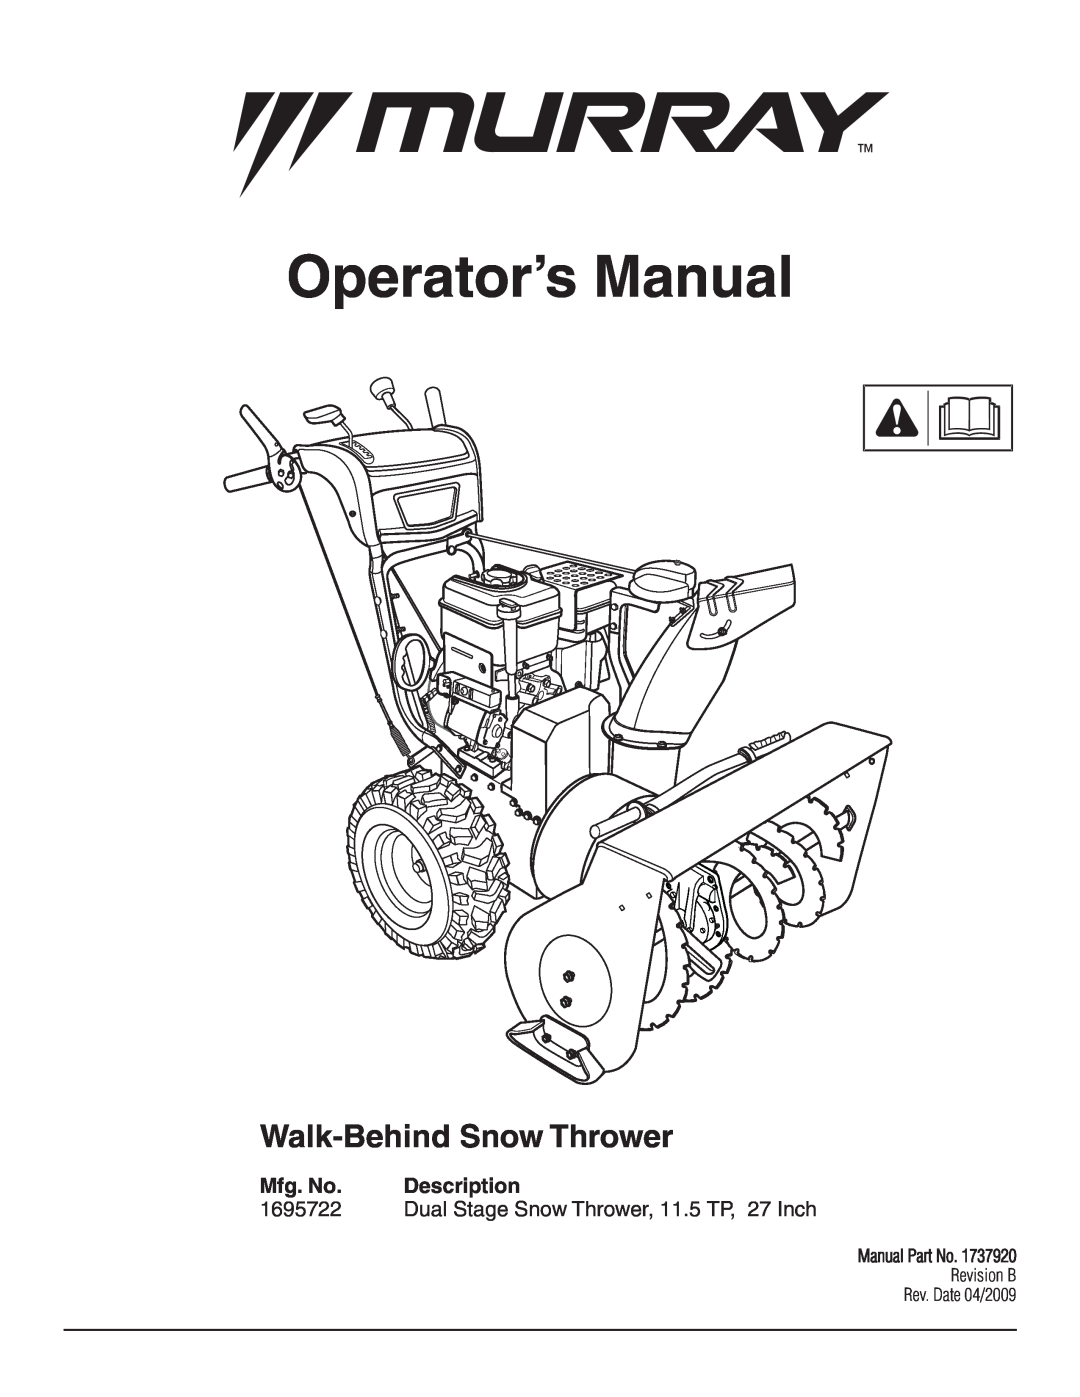 Murray 1737920 manual Mfg. No, Description, Operator’s Manual, Walk-Behind Snow Thrower, 1695722 